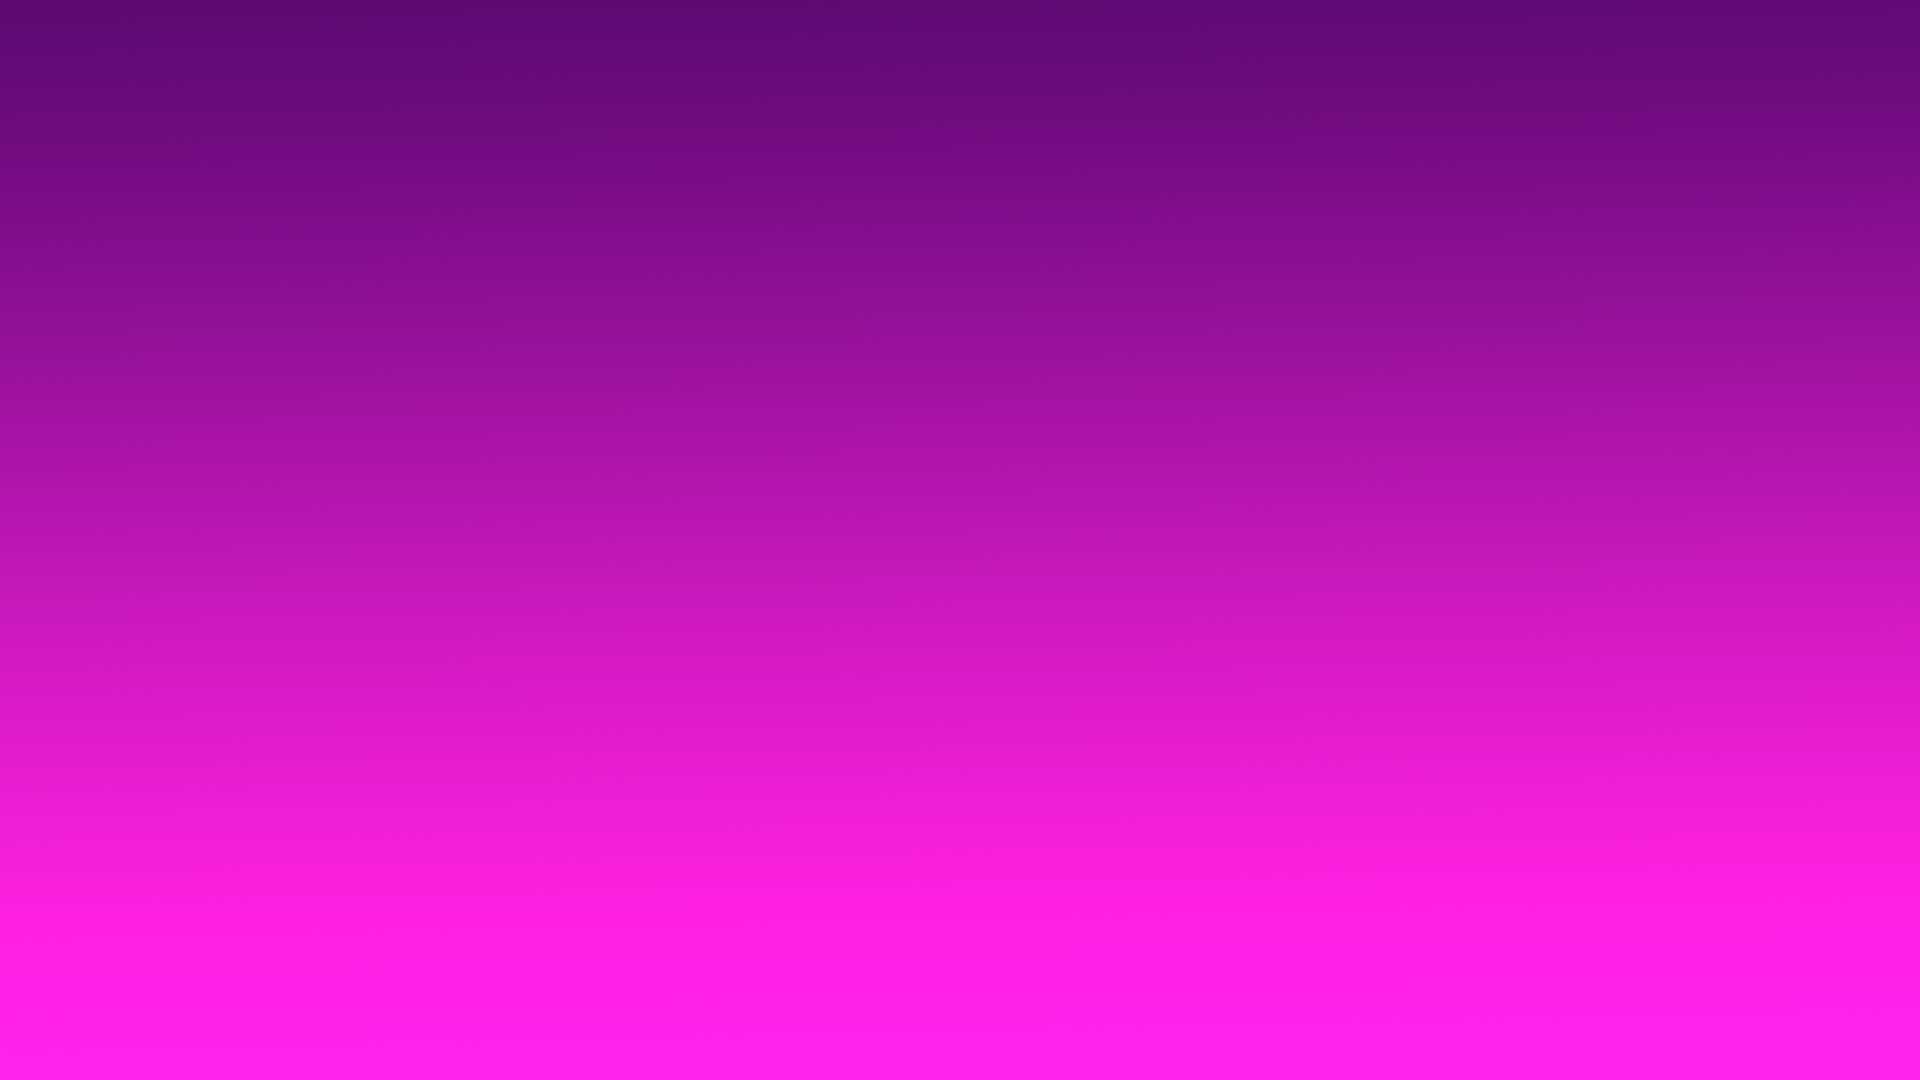 Purple Pink   EZTechTrainingcom 1920x1080